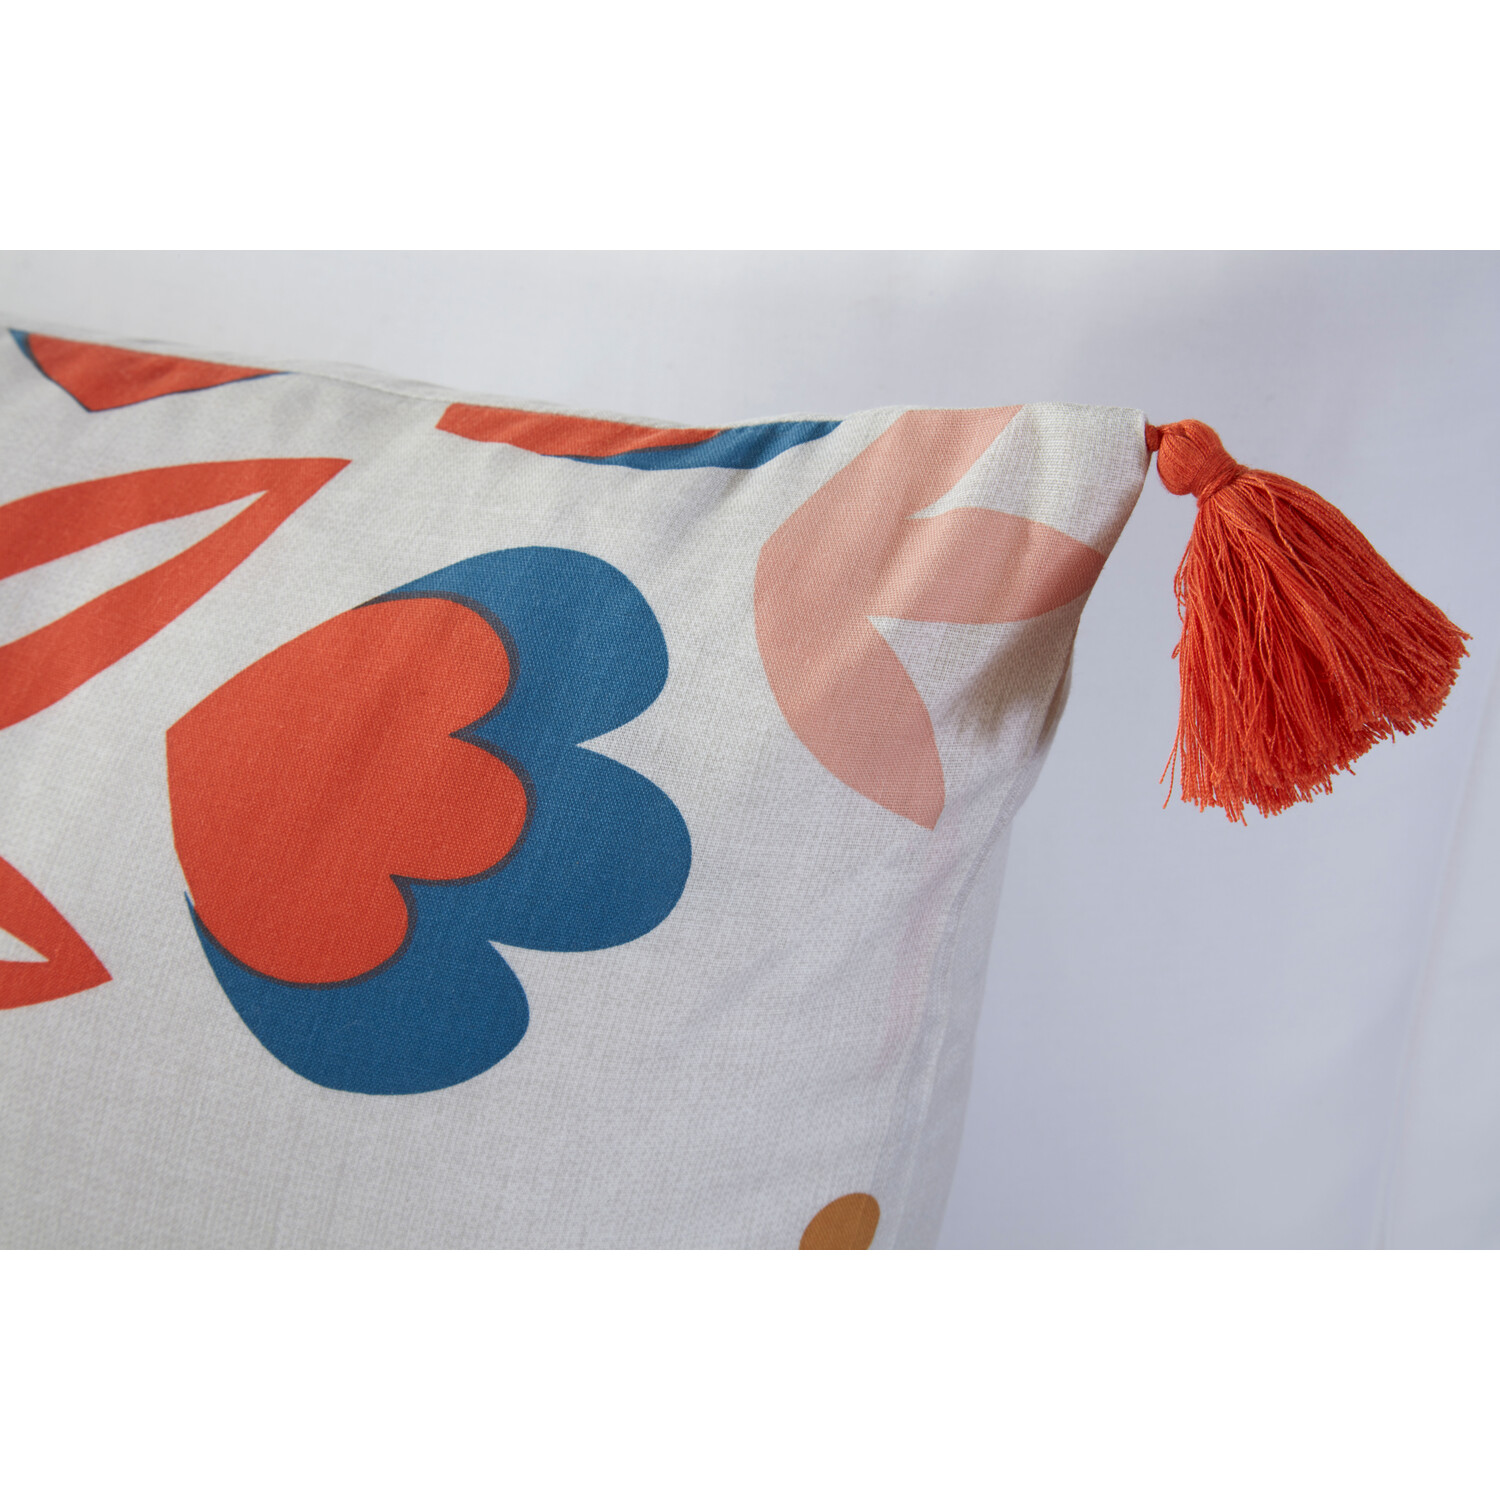 Amari Floral Duvet Cover and Pillowcase Set - Double Image 6